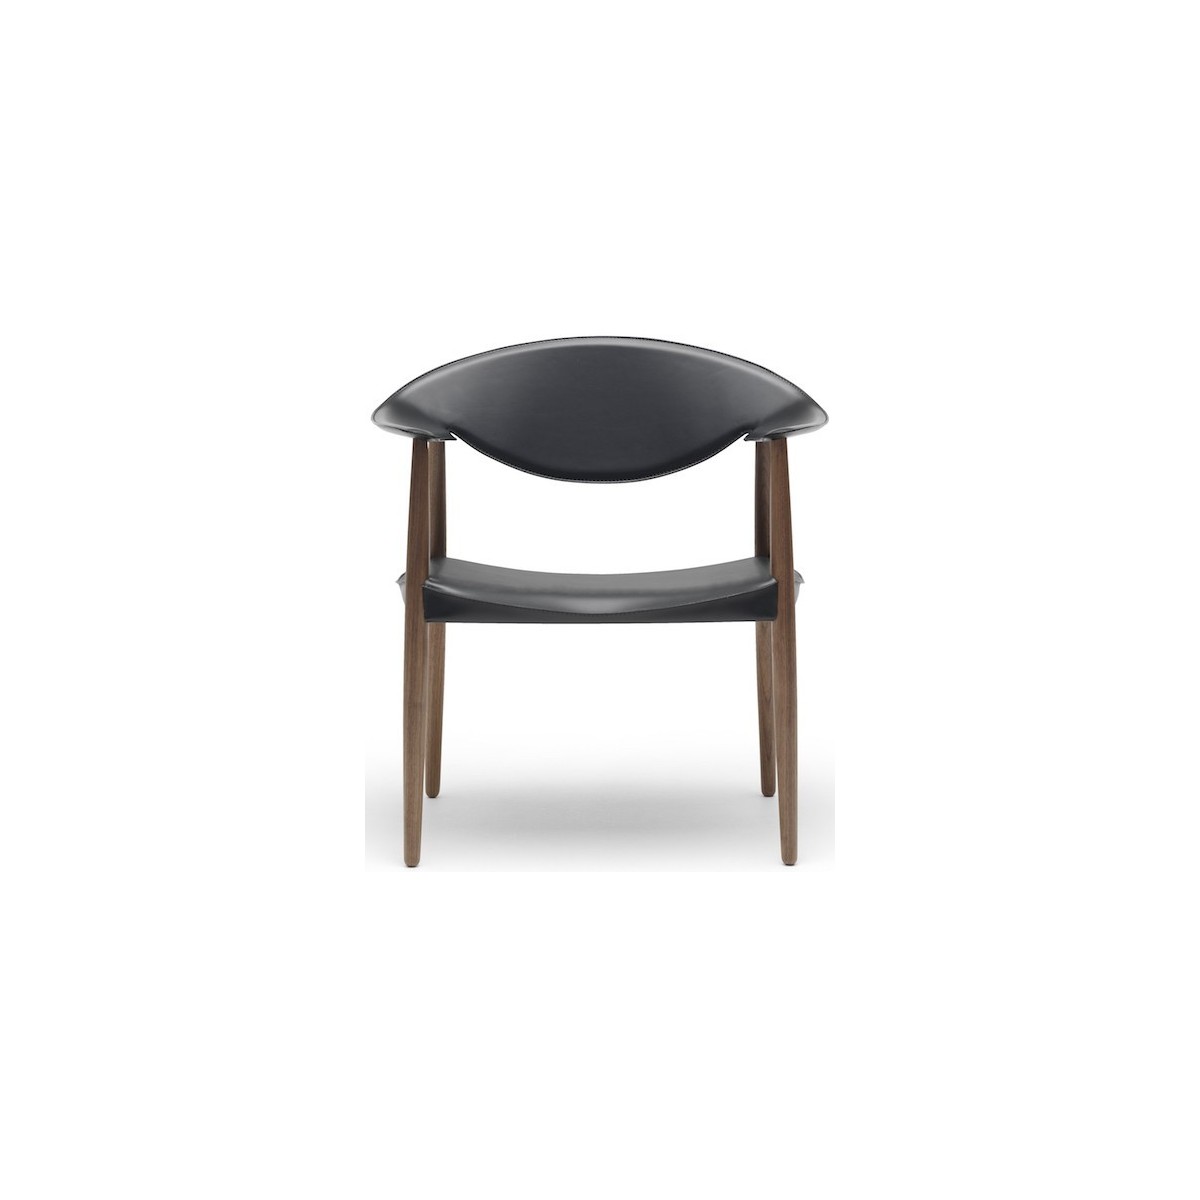 oiled walnut + black leather - Metropolitan LM92P chair